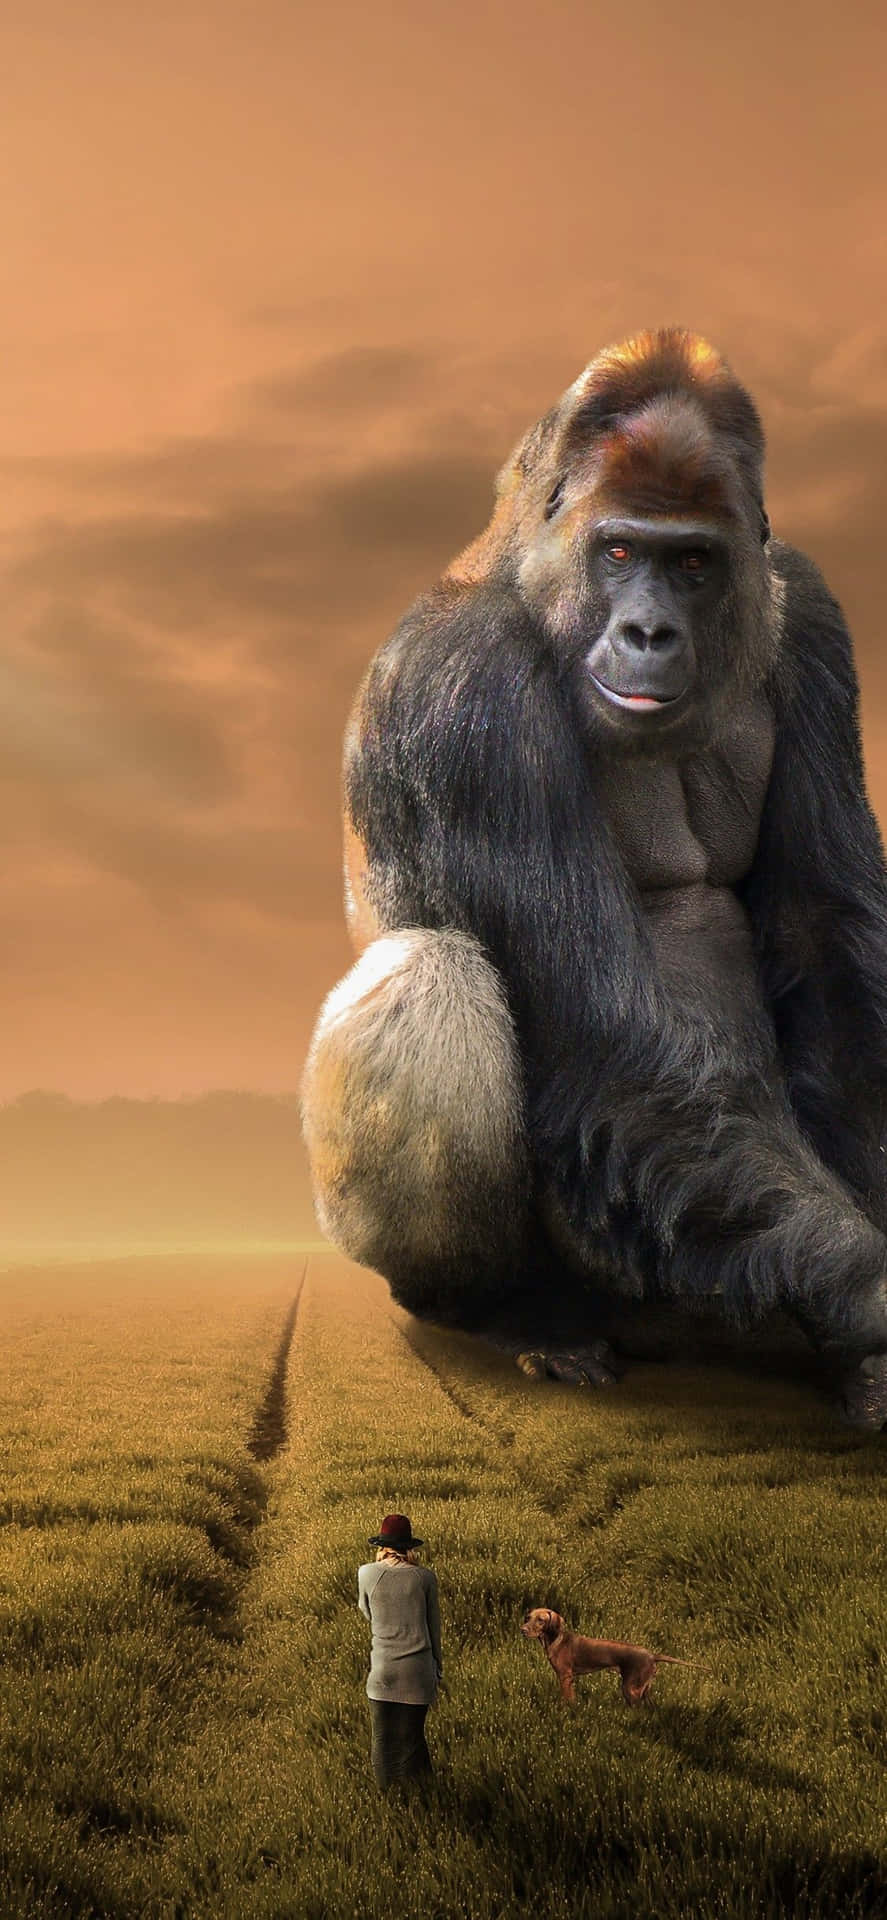 Gorilla in Natural Habitat, Shot with Pixel 3 Gorilla Background